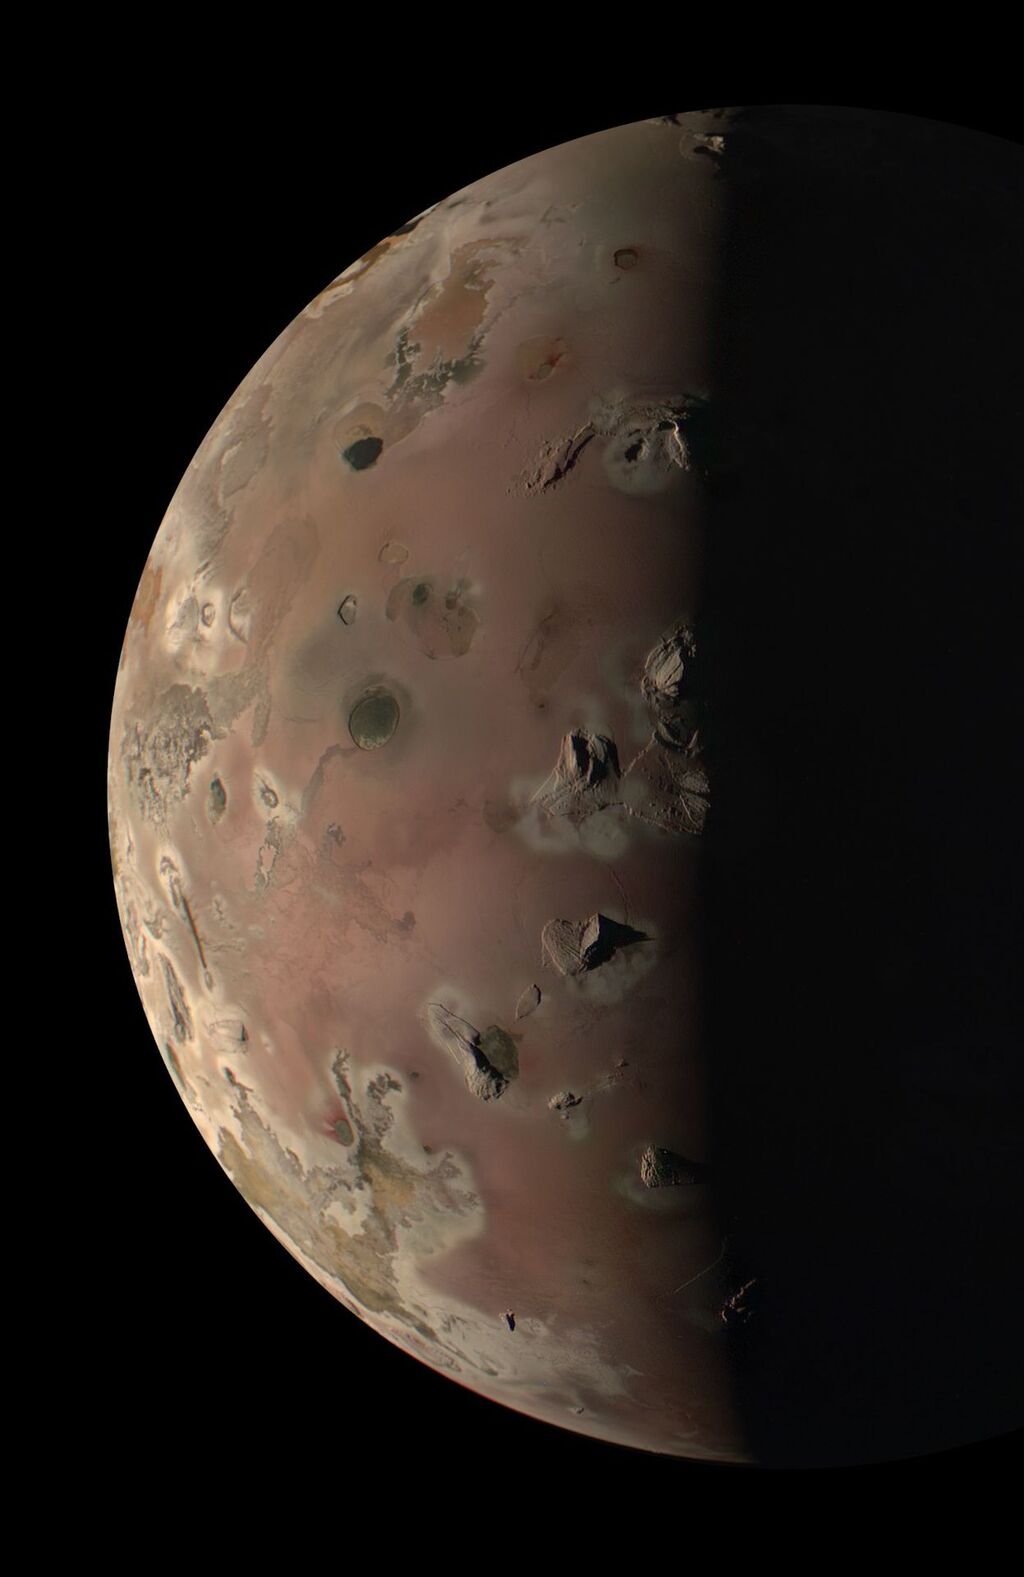 close up image of the reddish-brown moon Io